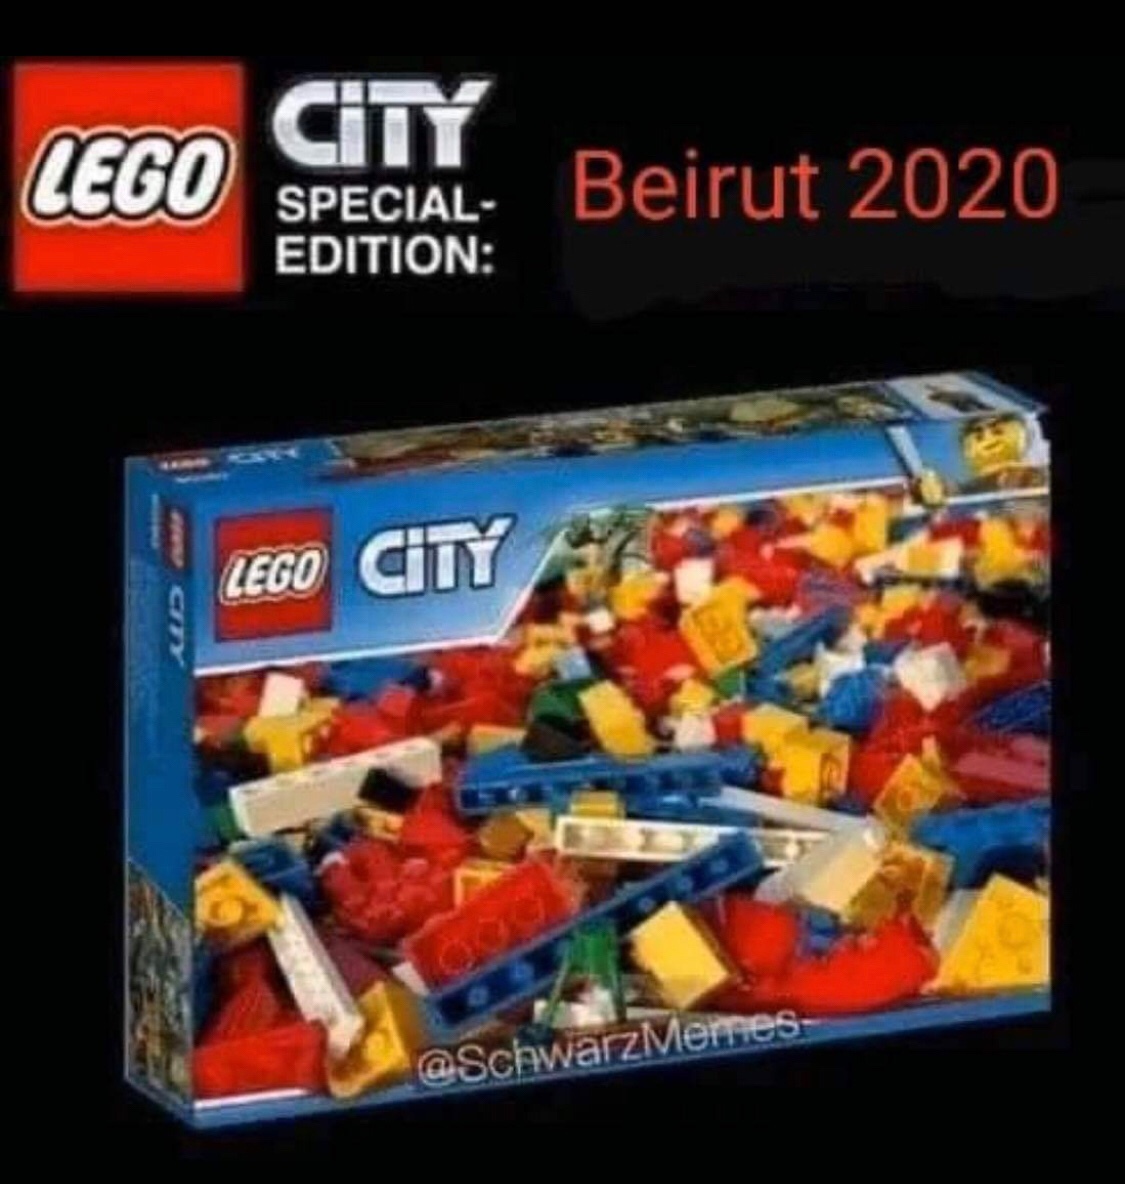 sickest Lego set of August 2020 - meme